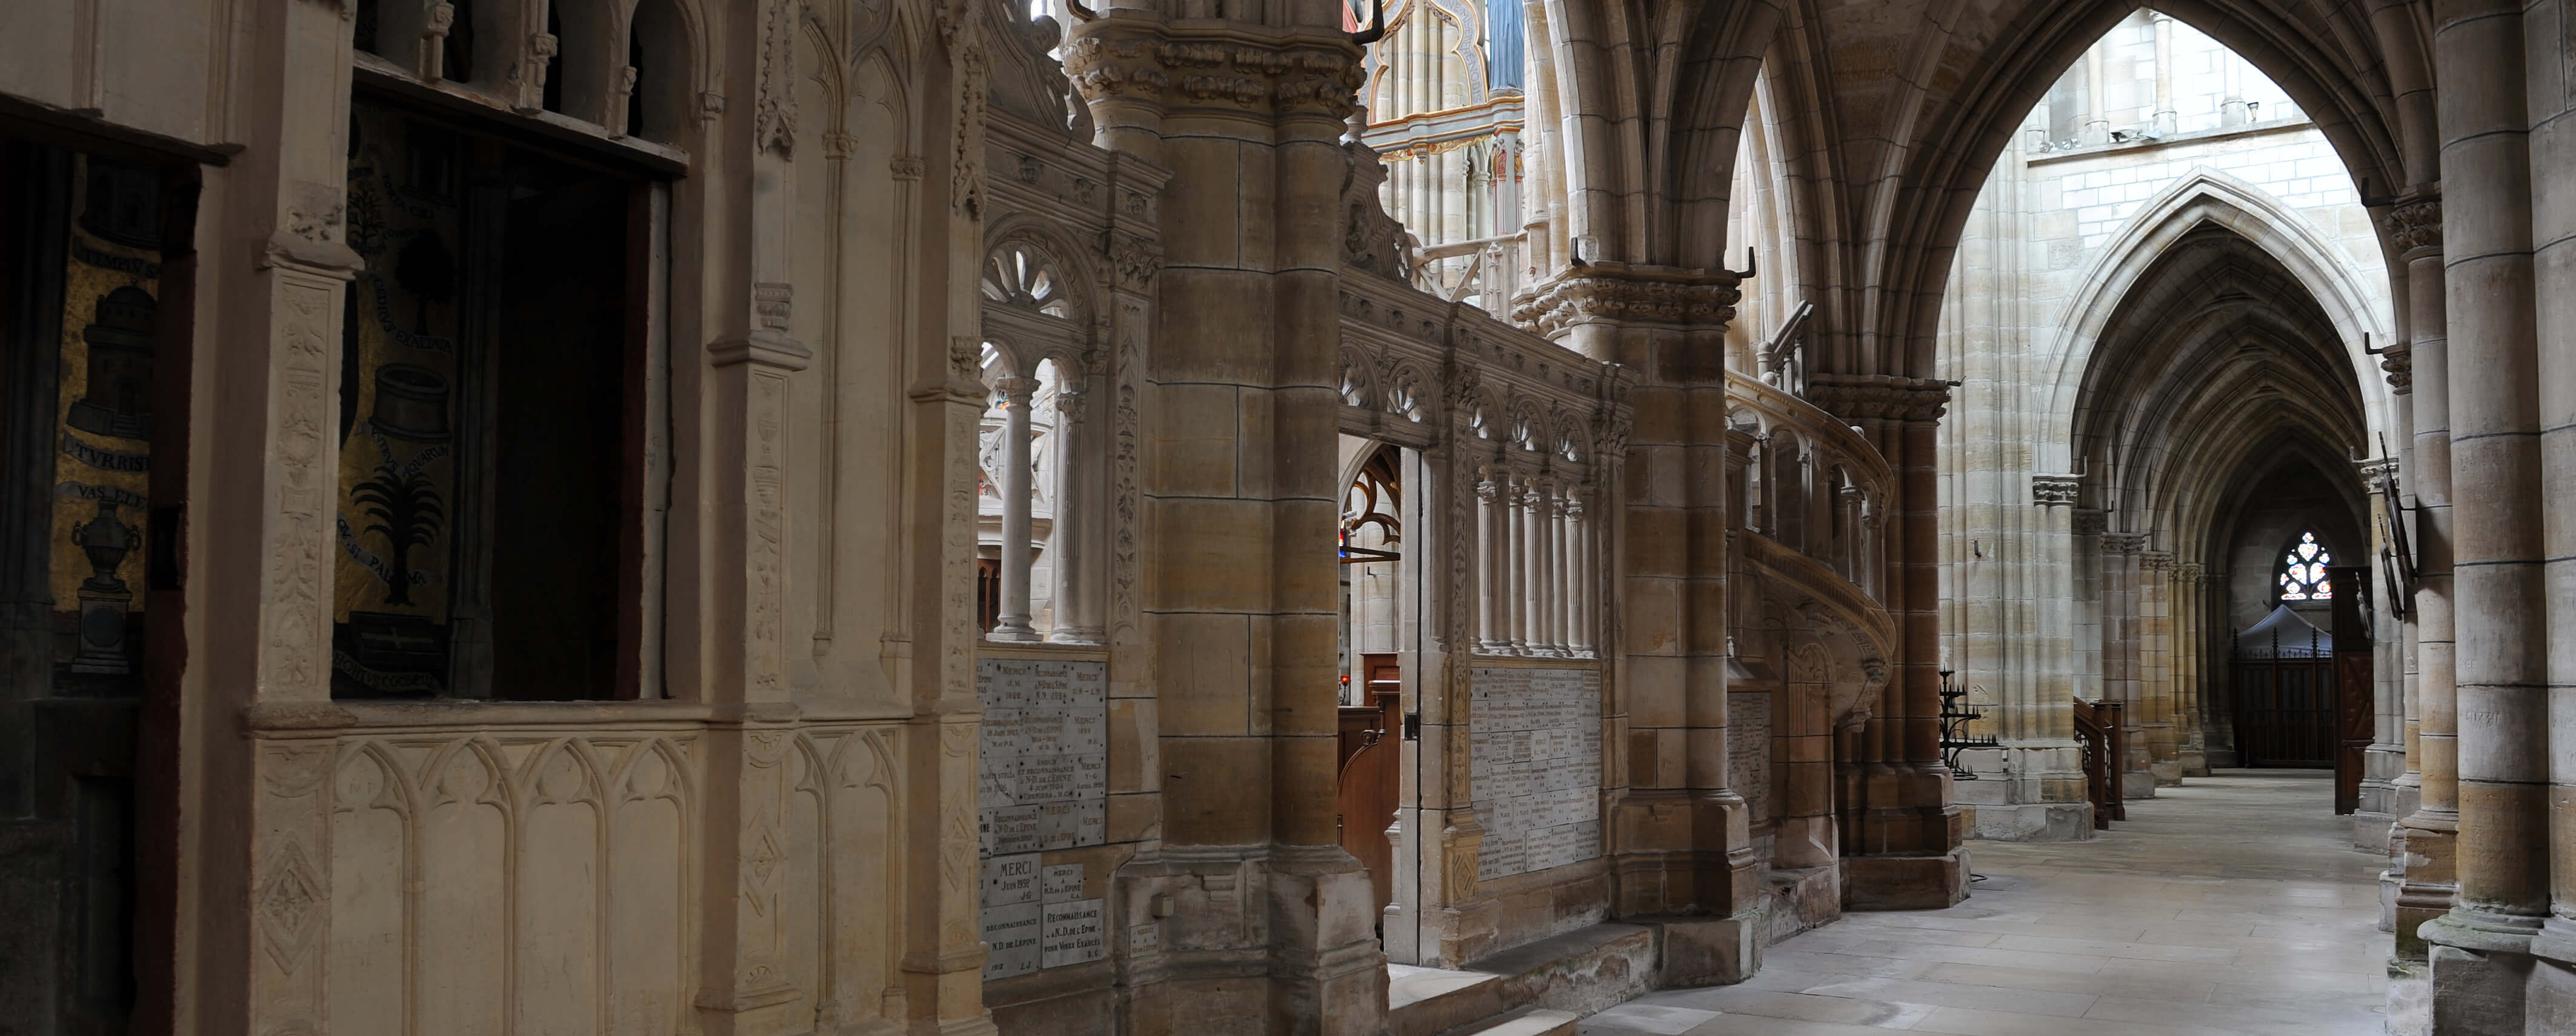 Basilique Notre-Dame©ACIR / JJ Gelbart